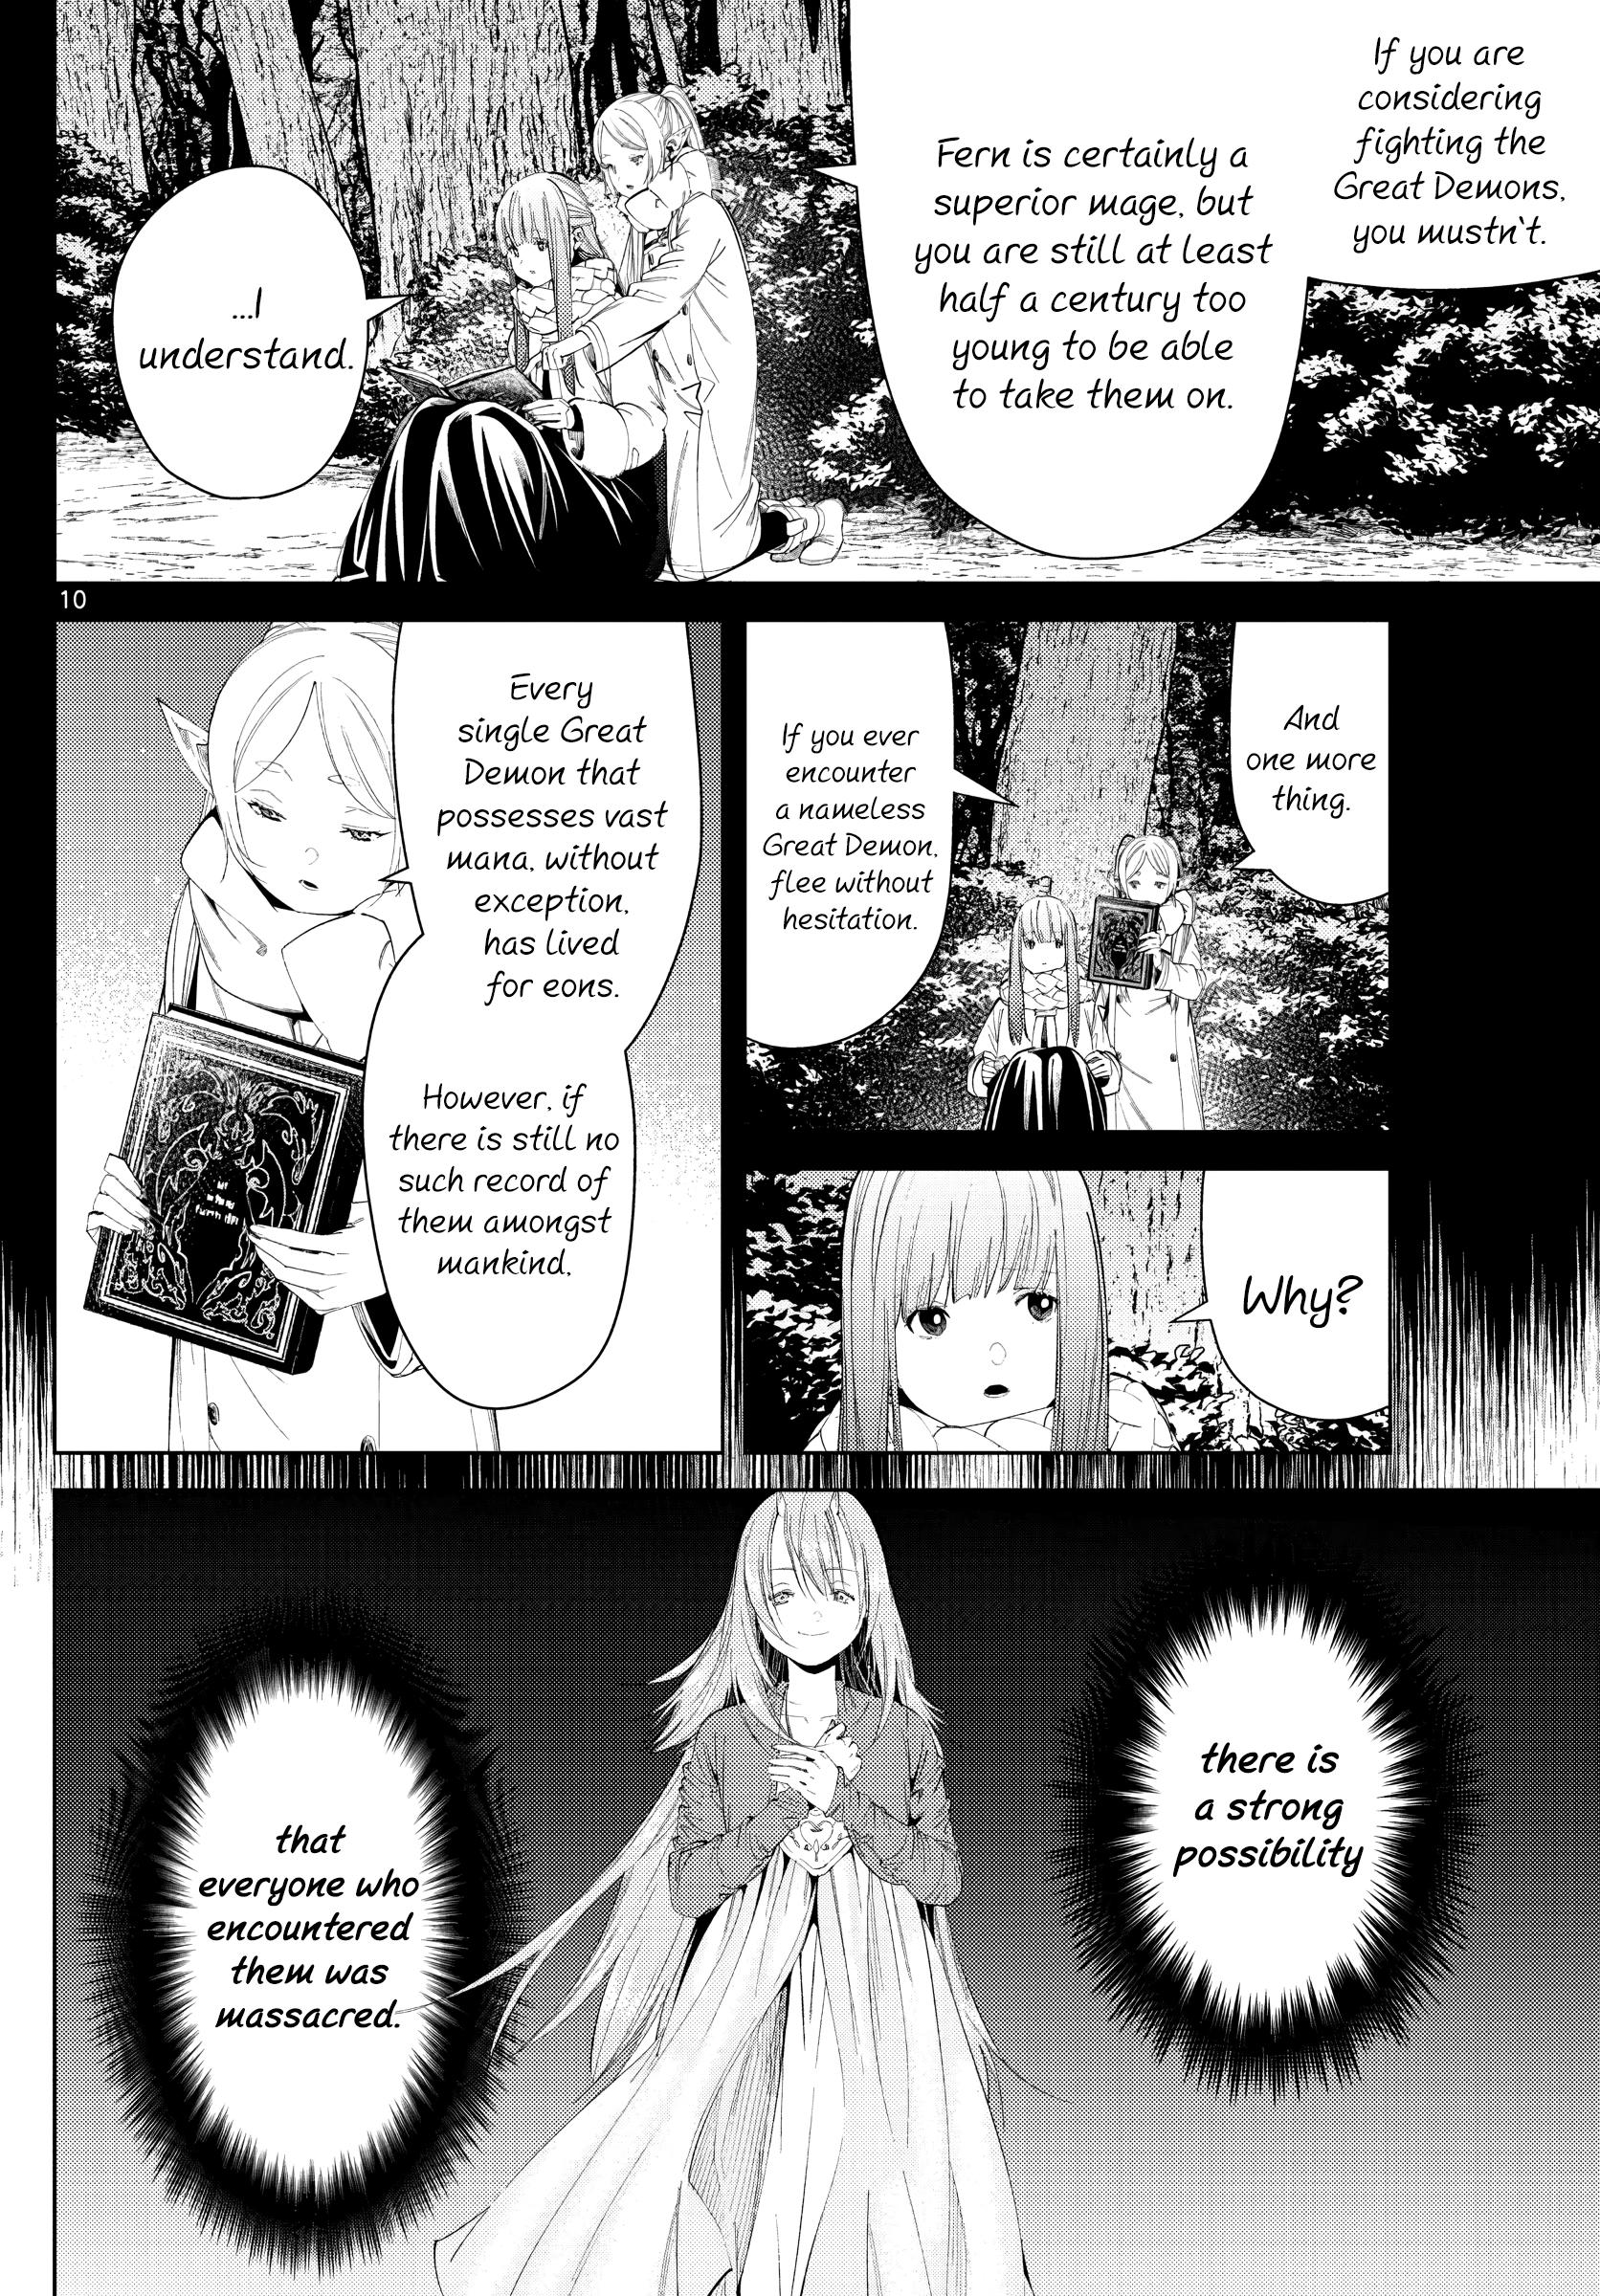 Sousou No Frieren Chapter 95: Nameless Great Demon page 10 - Mangakakalot